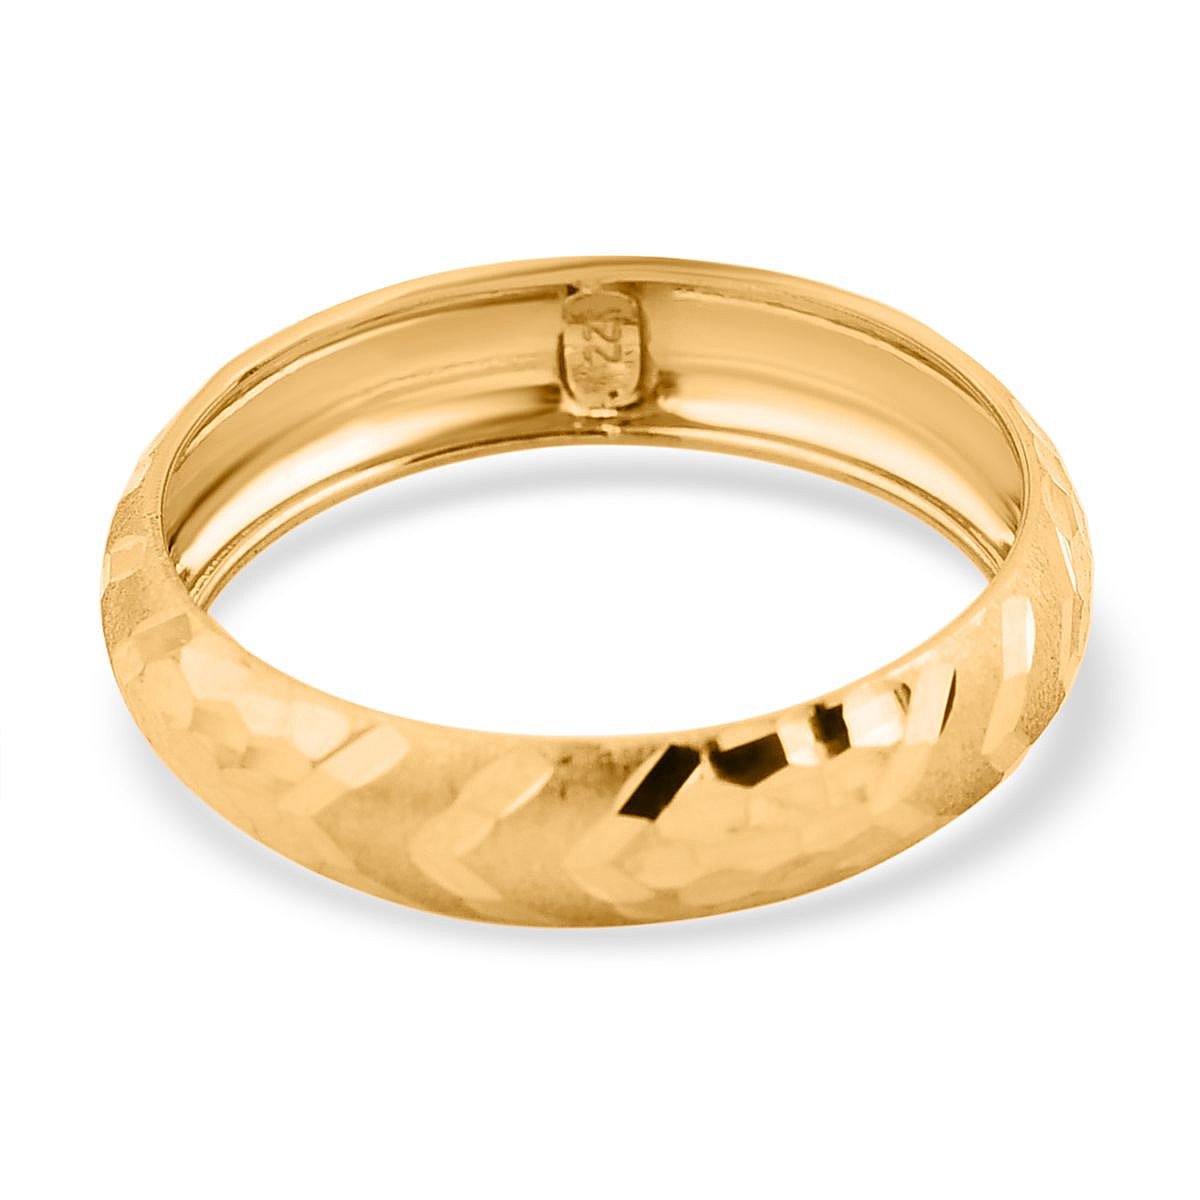 JCK Vegas Deal - 22K (91.6% Purity) Yellow Gold Diamond-Cut Band Ring